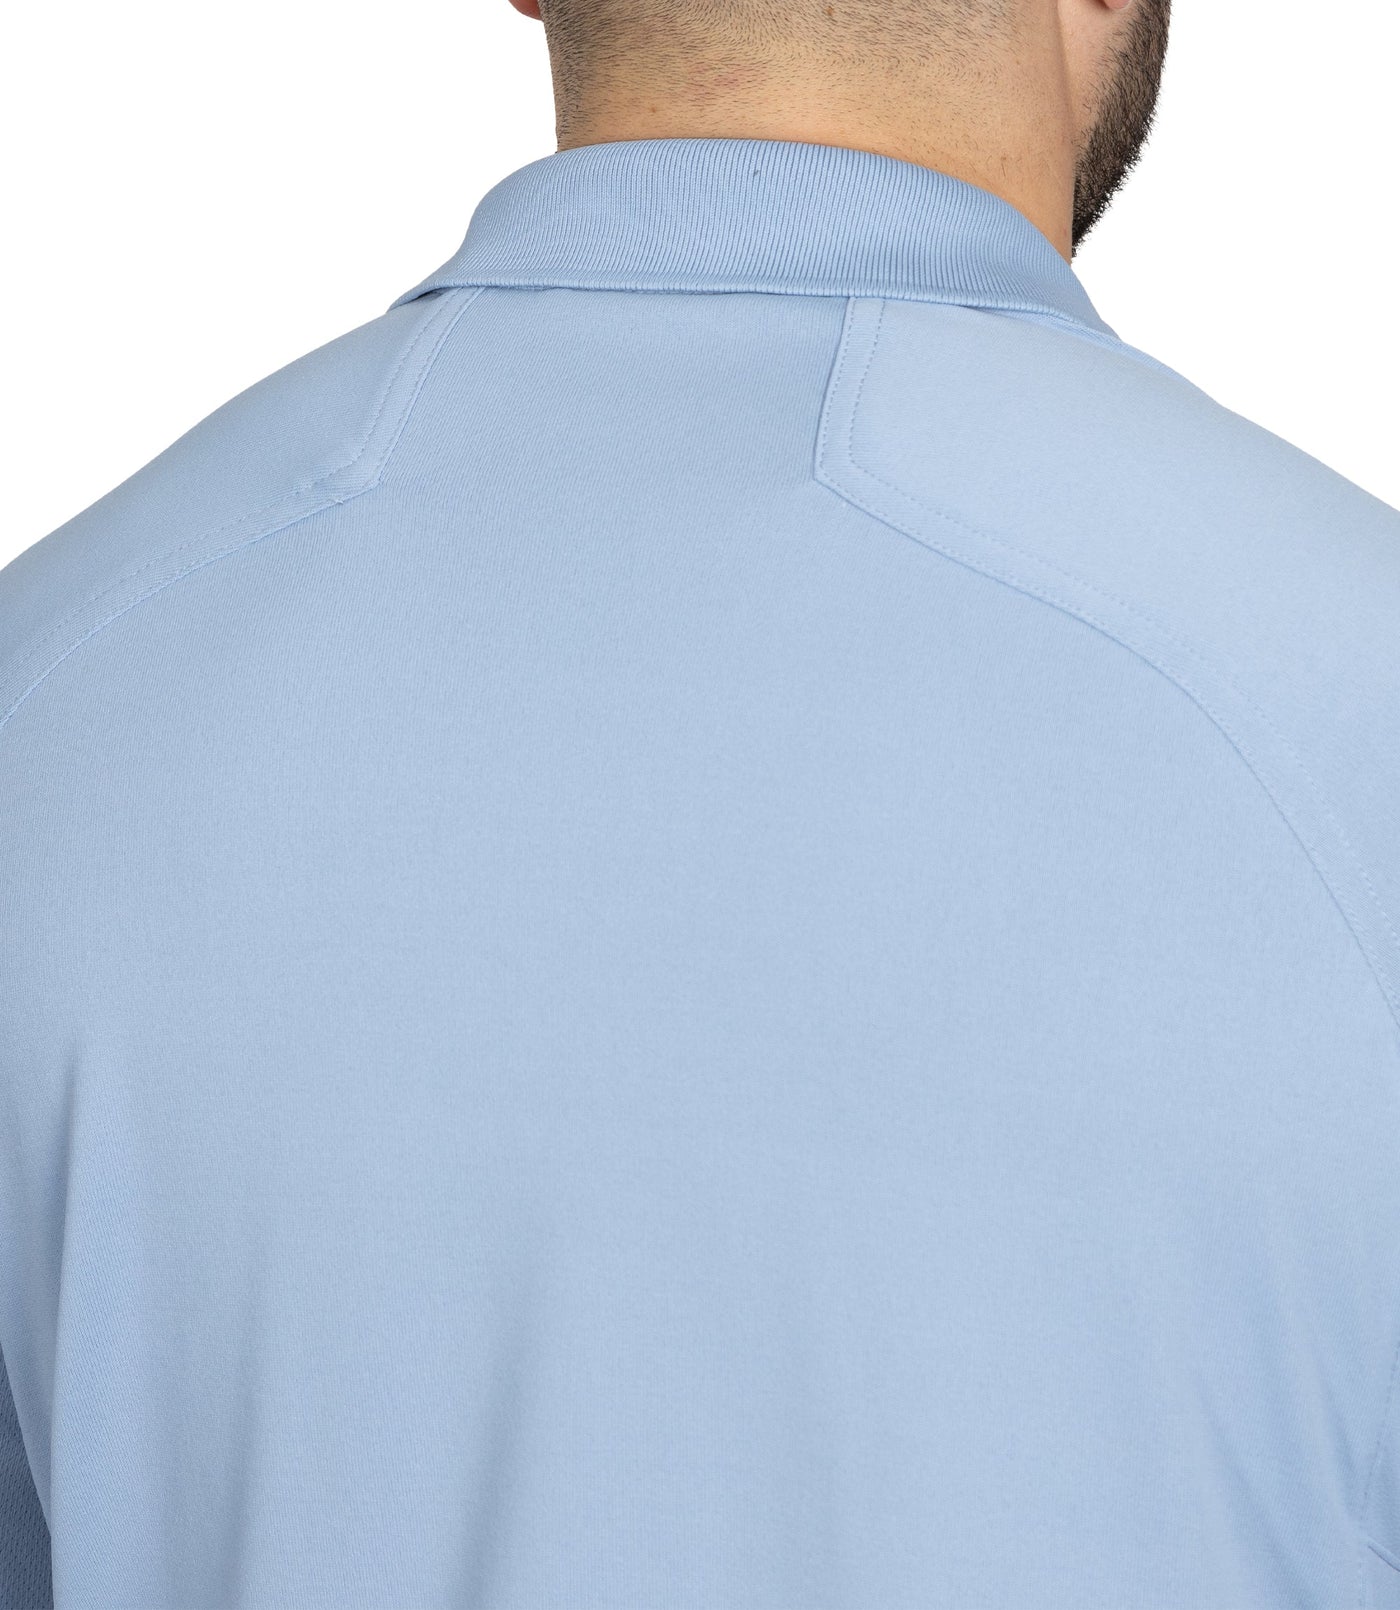 Men's Performance Long Sleeve Polo - Medium Blue